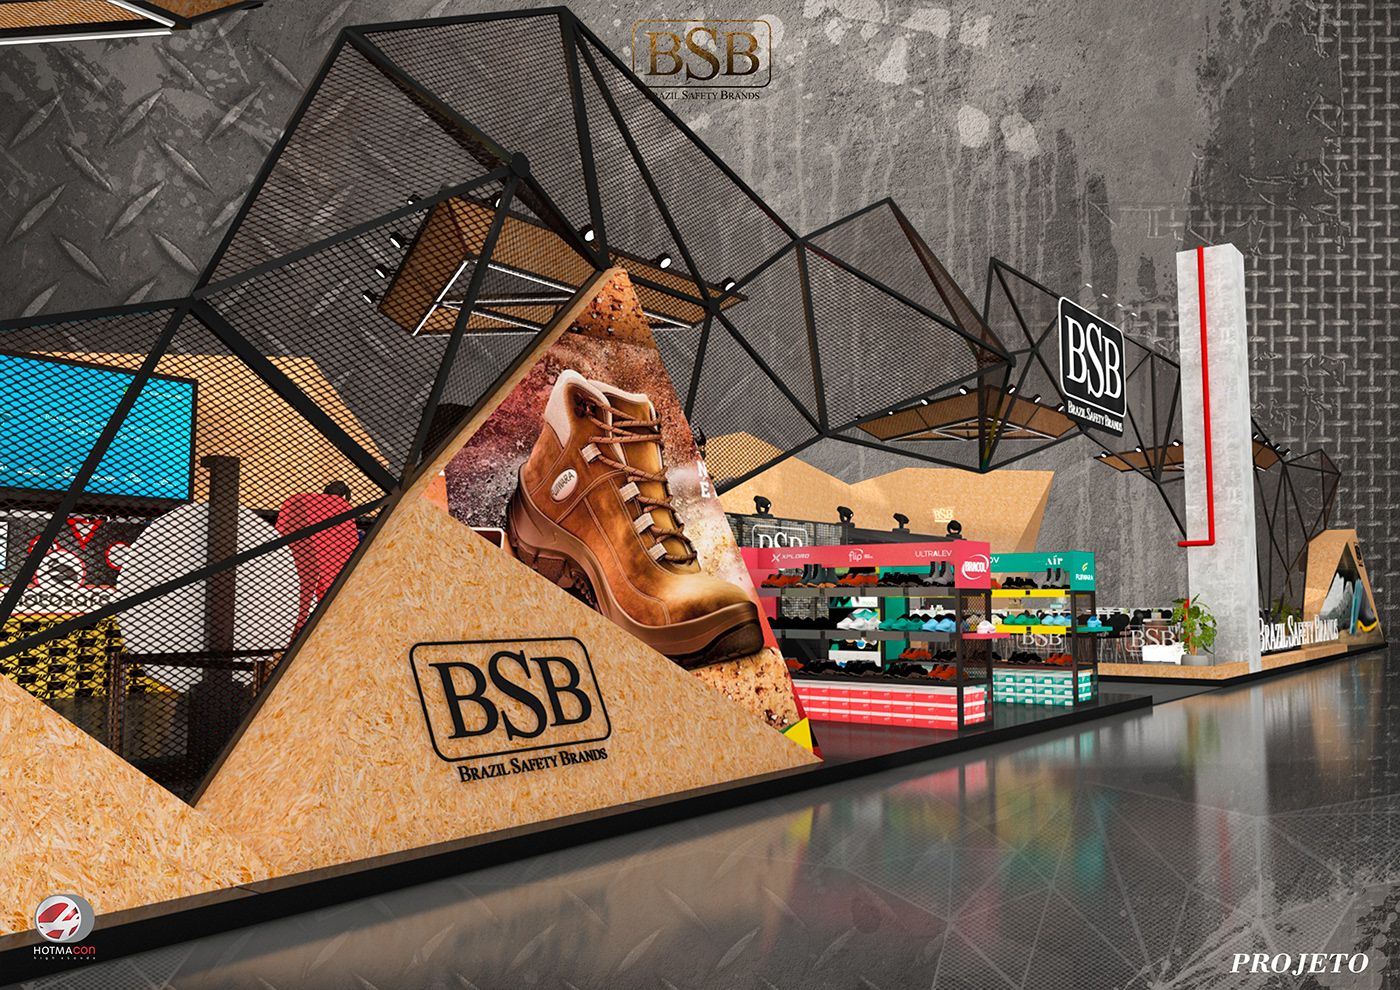 bsb Stand FISP Exhibition Stand Design exhibition booth design booth trade fair bracol fujiwara